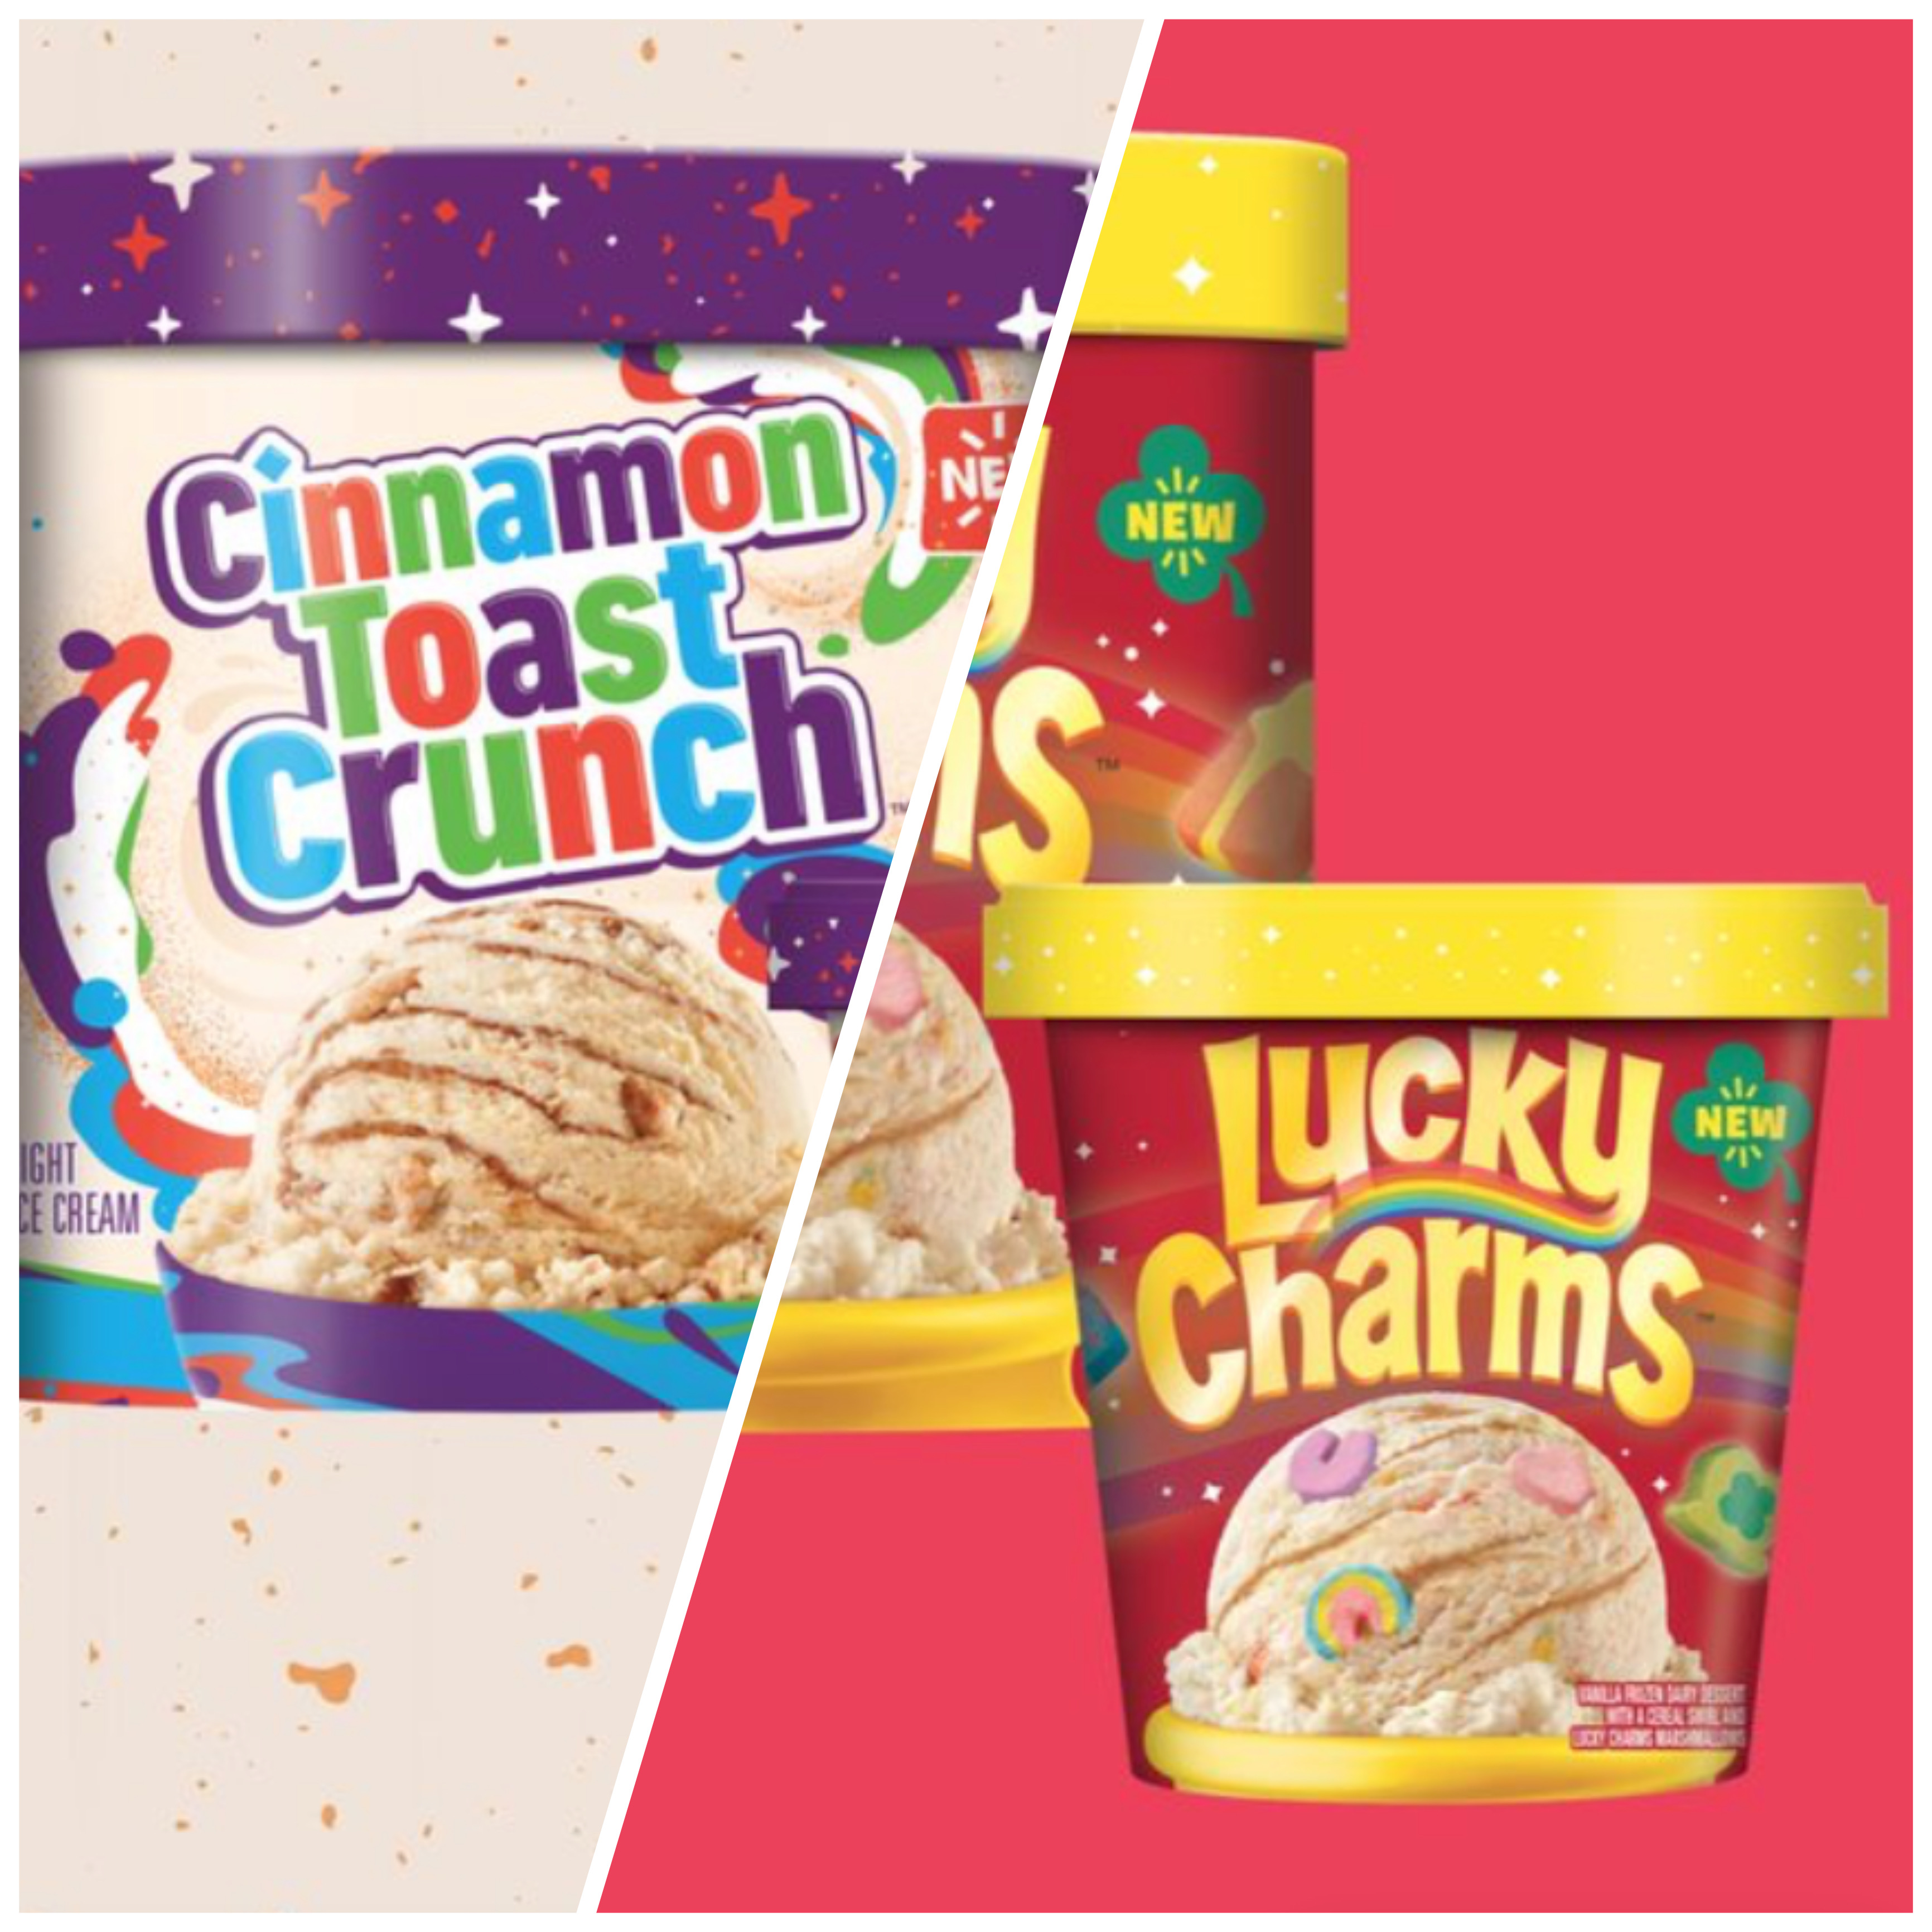 Cinnamon Toast Crunch Ice Cream